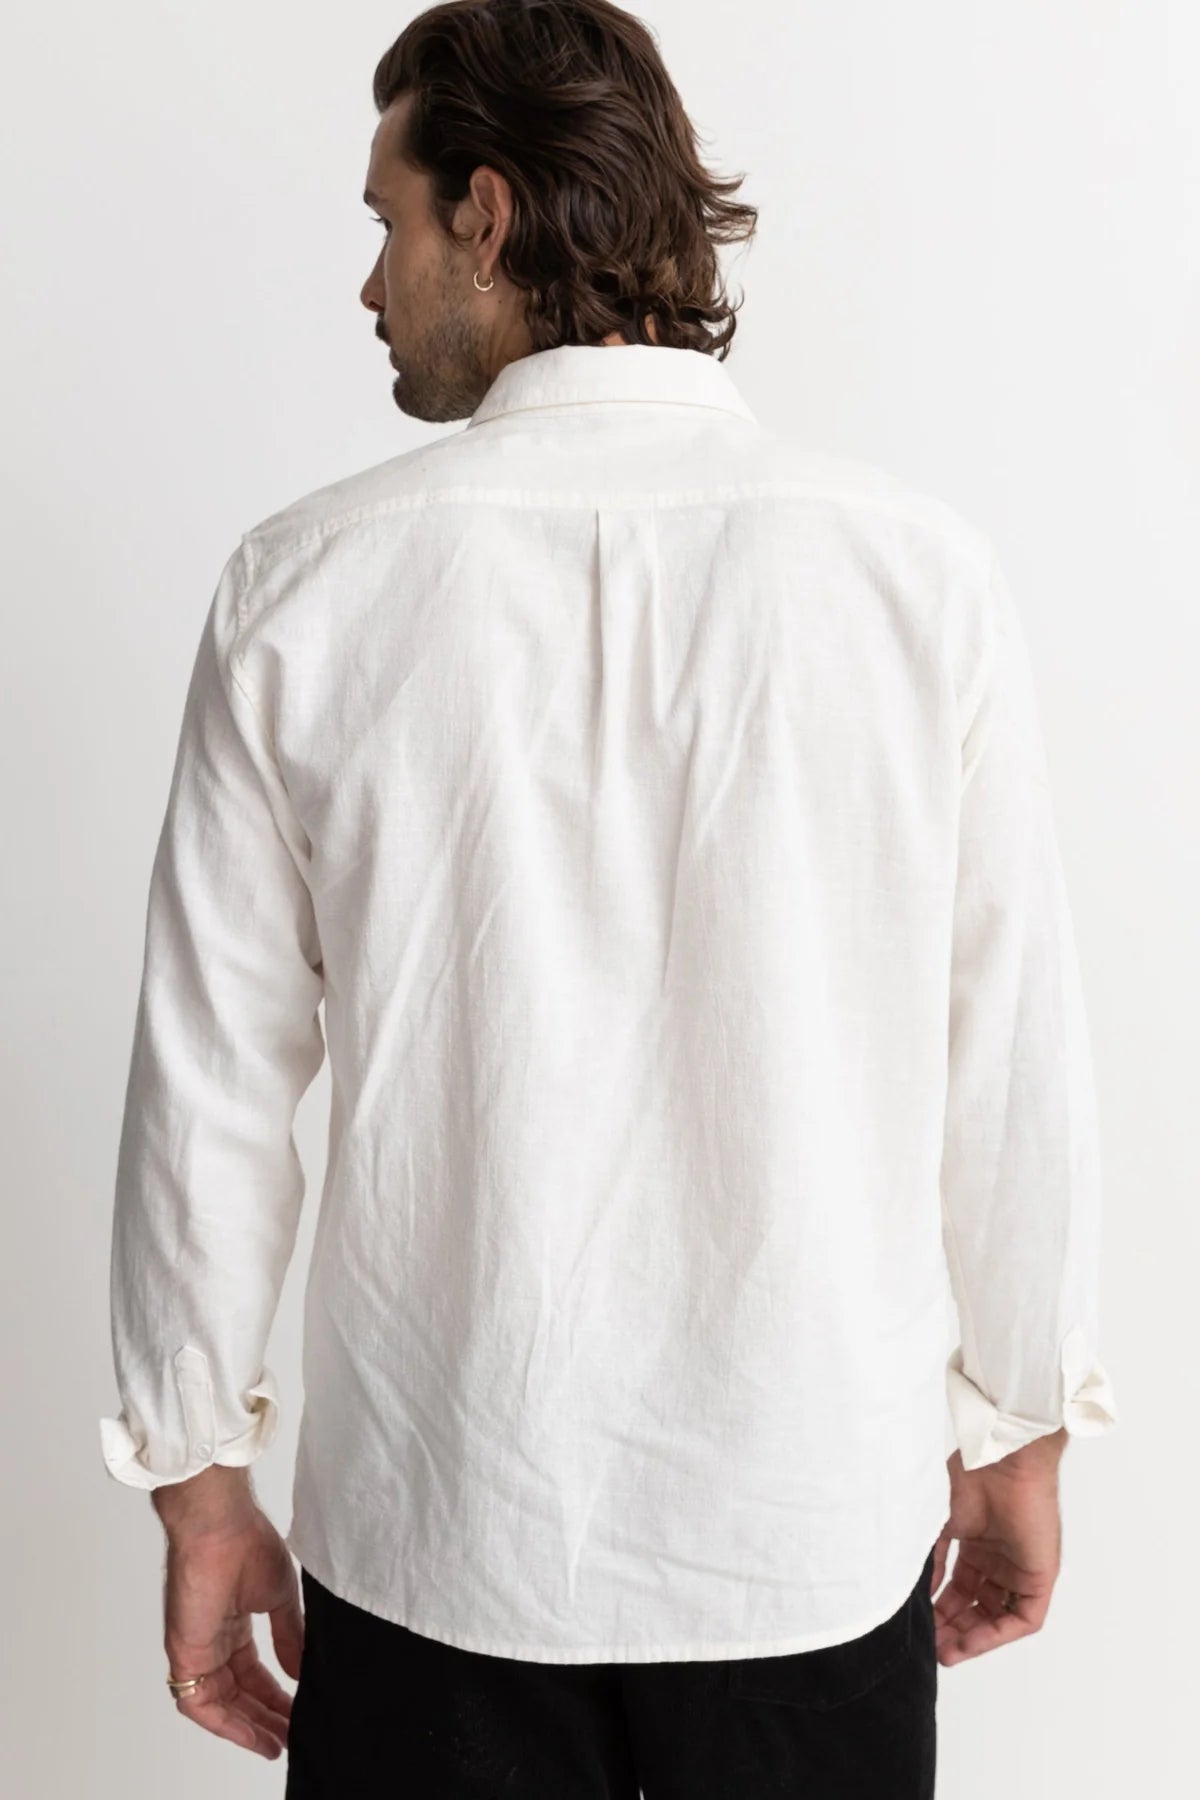 Men's long sleeve white button down shirt back view